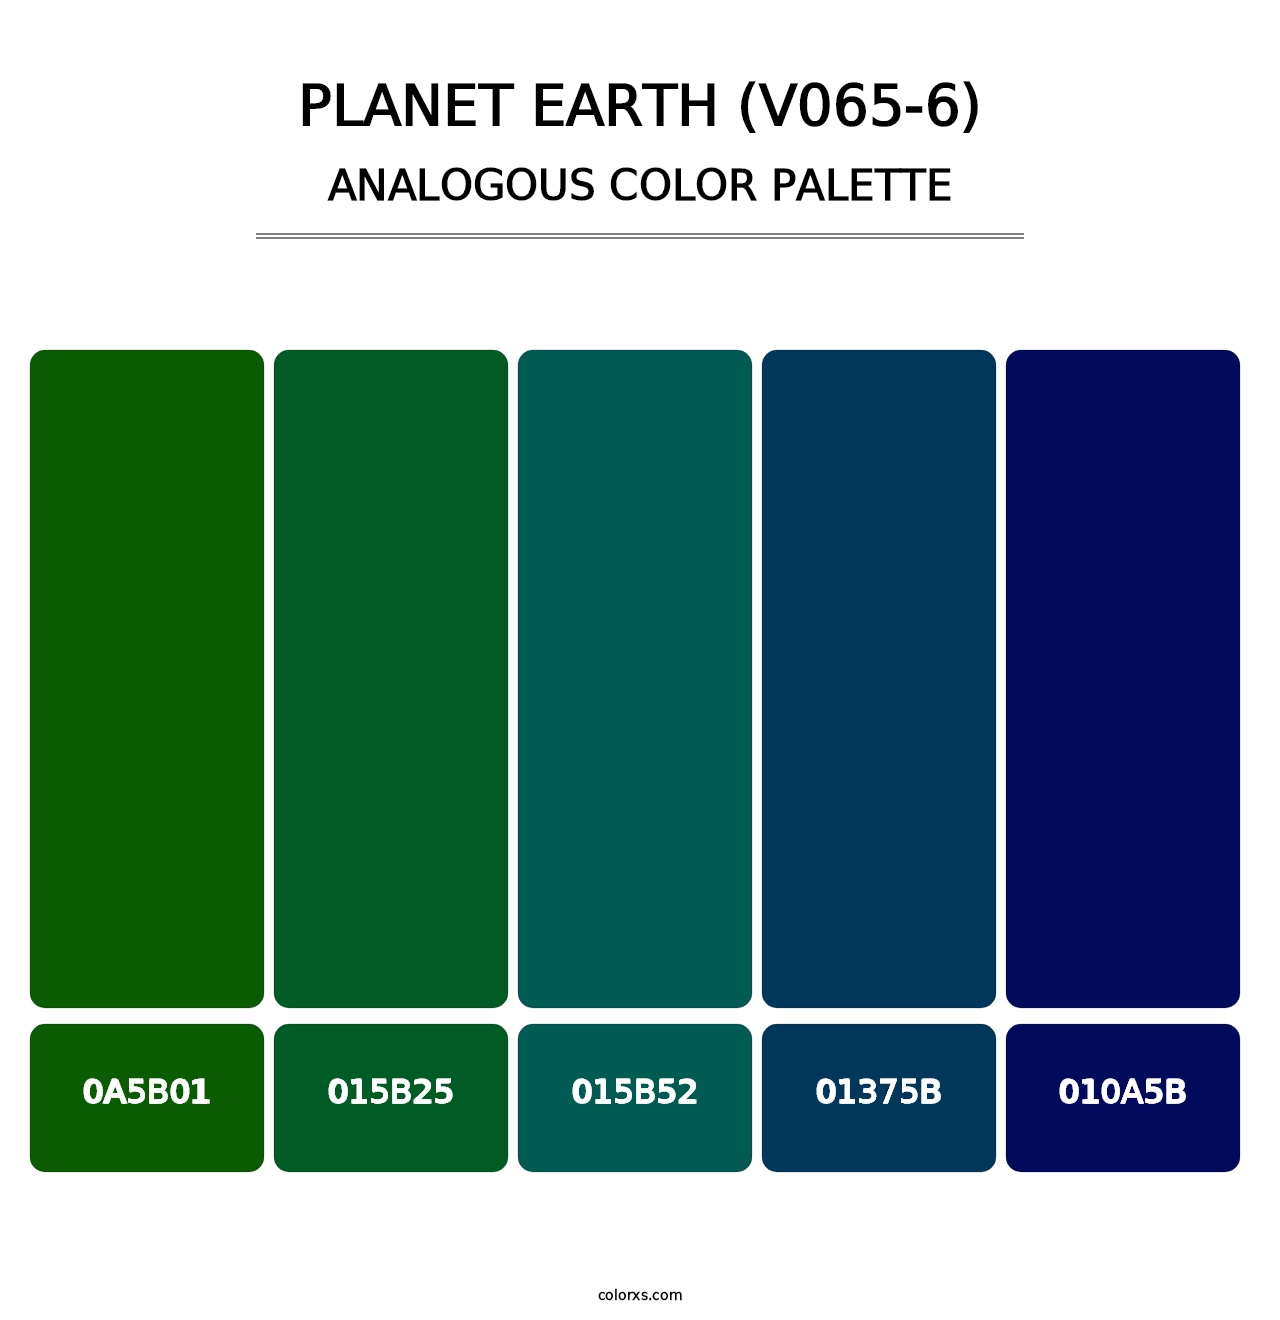 Planet Earth (V065-6) - Analogous Color Palette